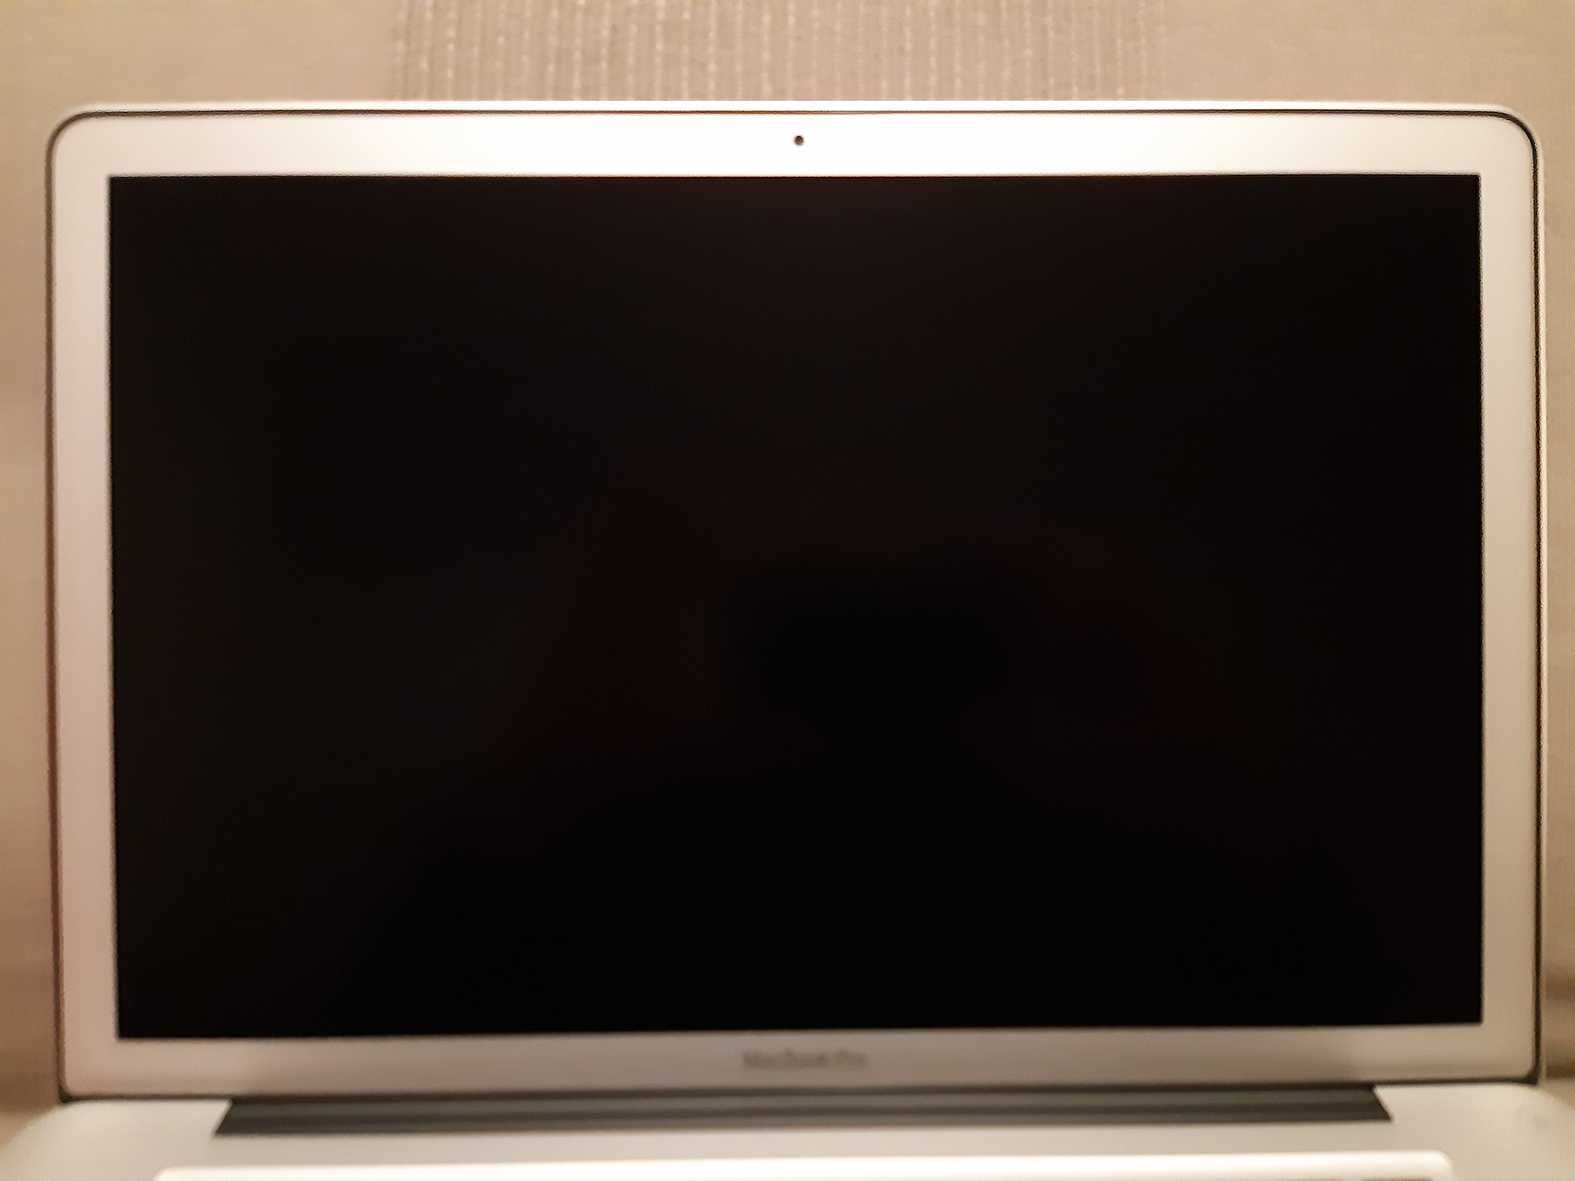 MacBook Pro com écran de 15" e anti-reflexo - finais 2011